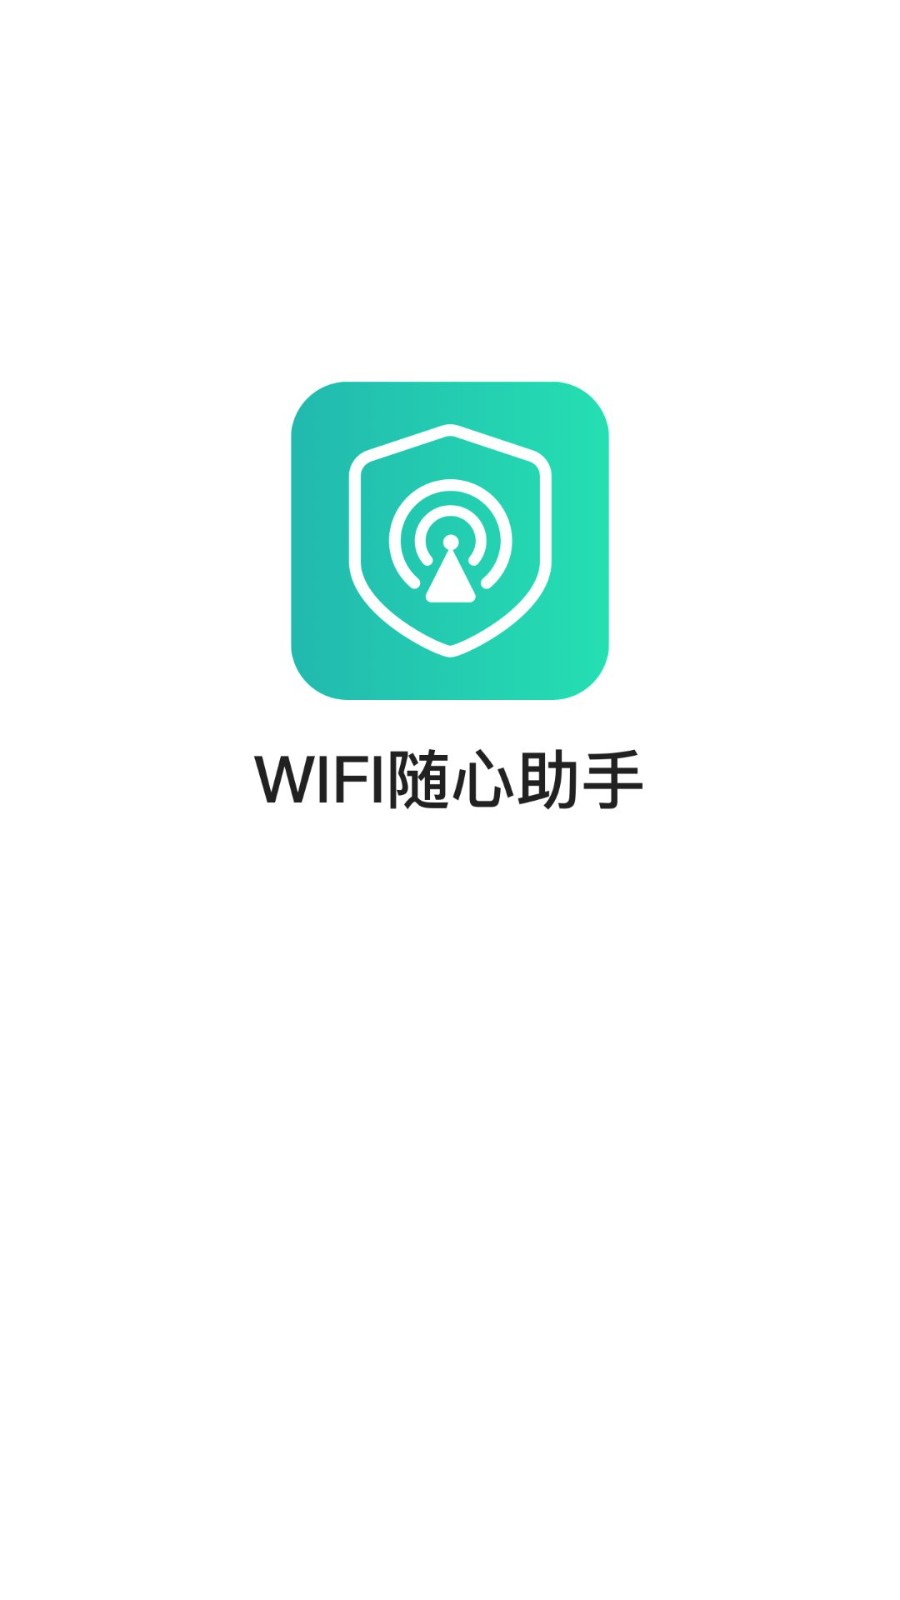 wifi随心助手软件